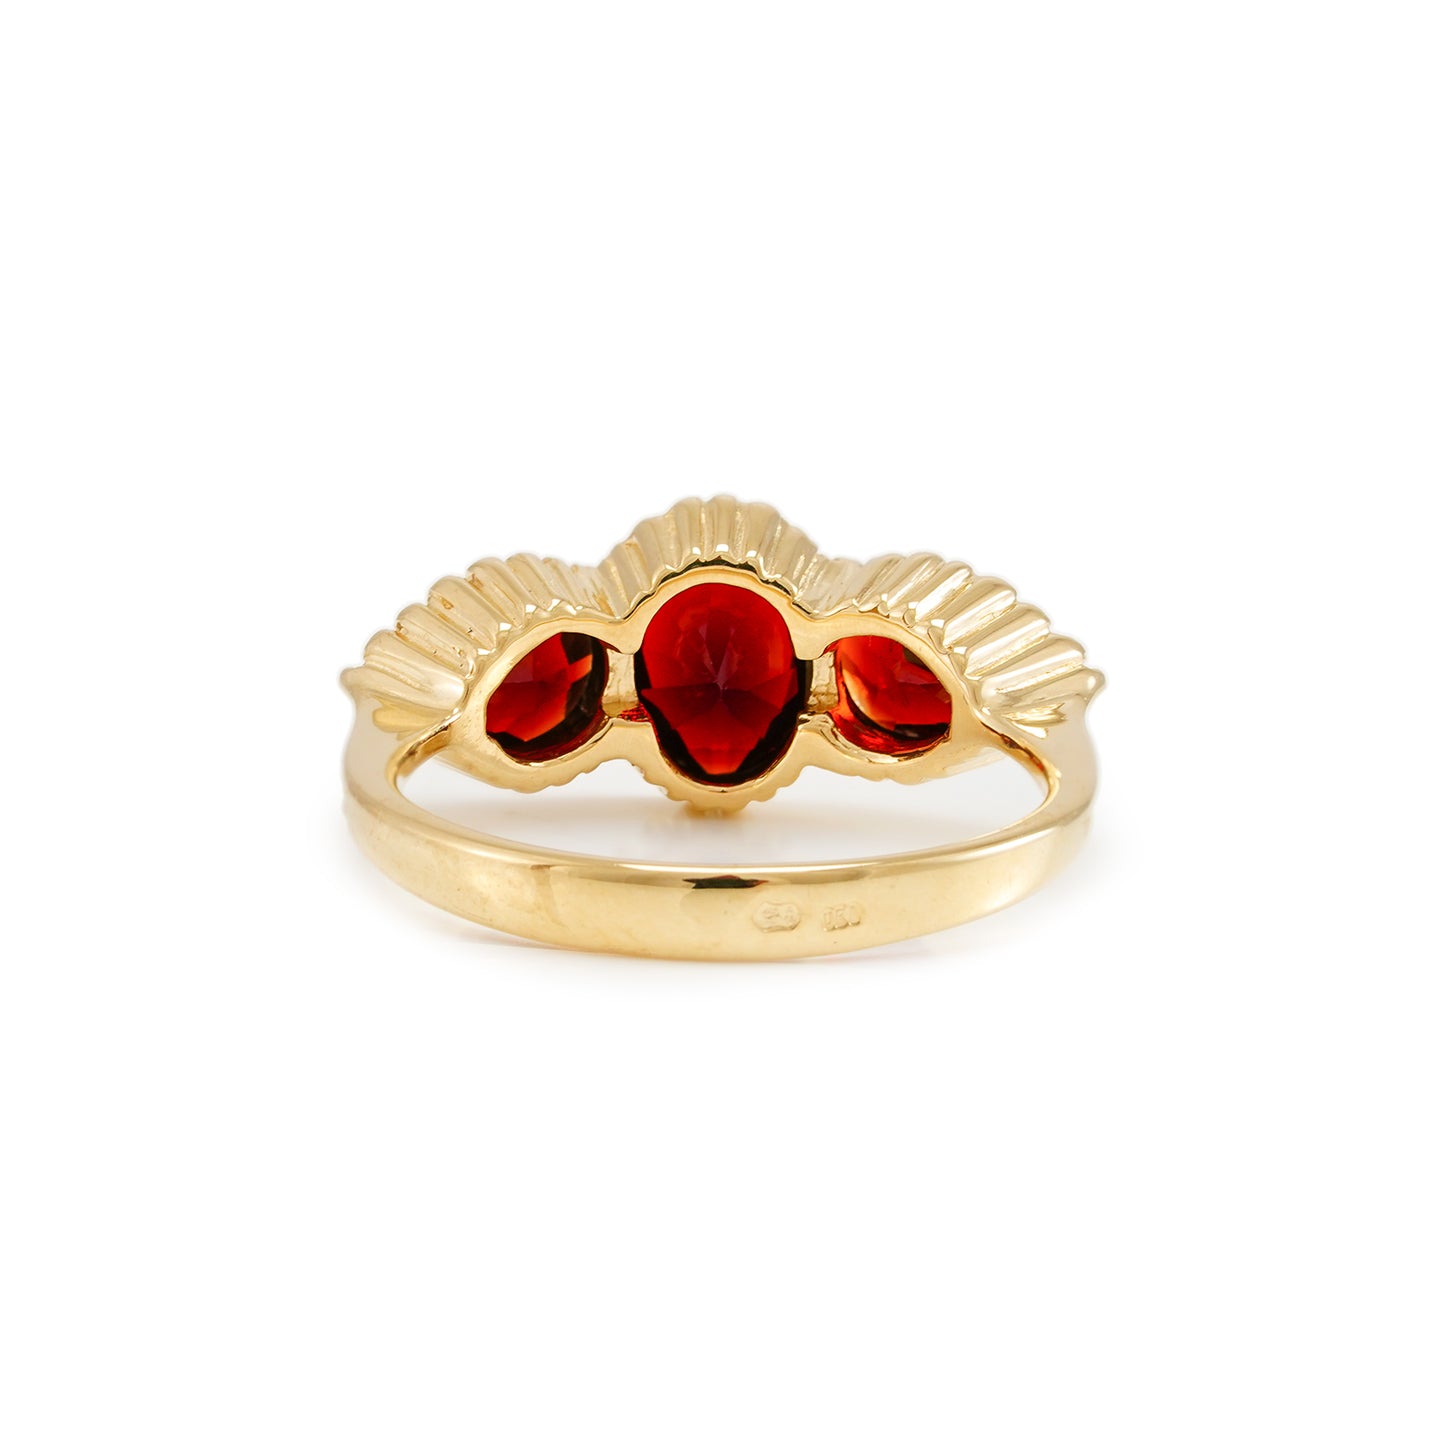 Edelstein Ring Vintage Granat Gelbgold 14K Damenschmuck Goldring Damenring